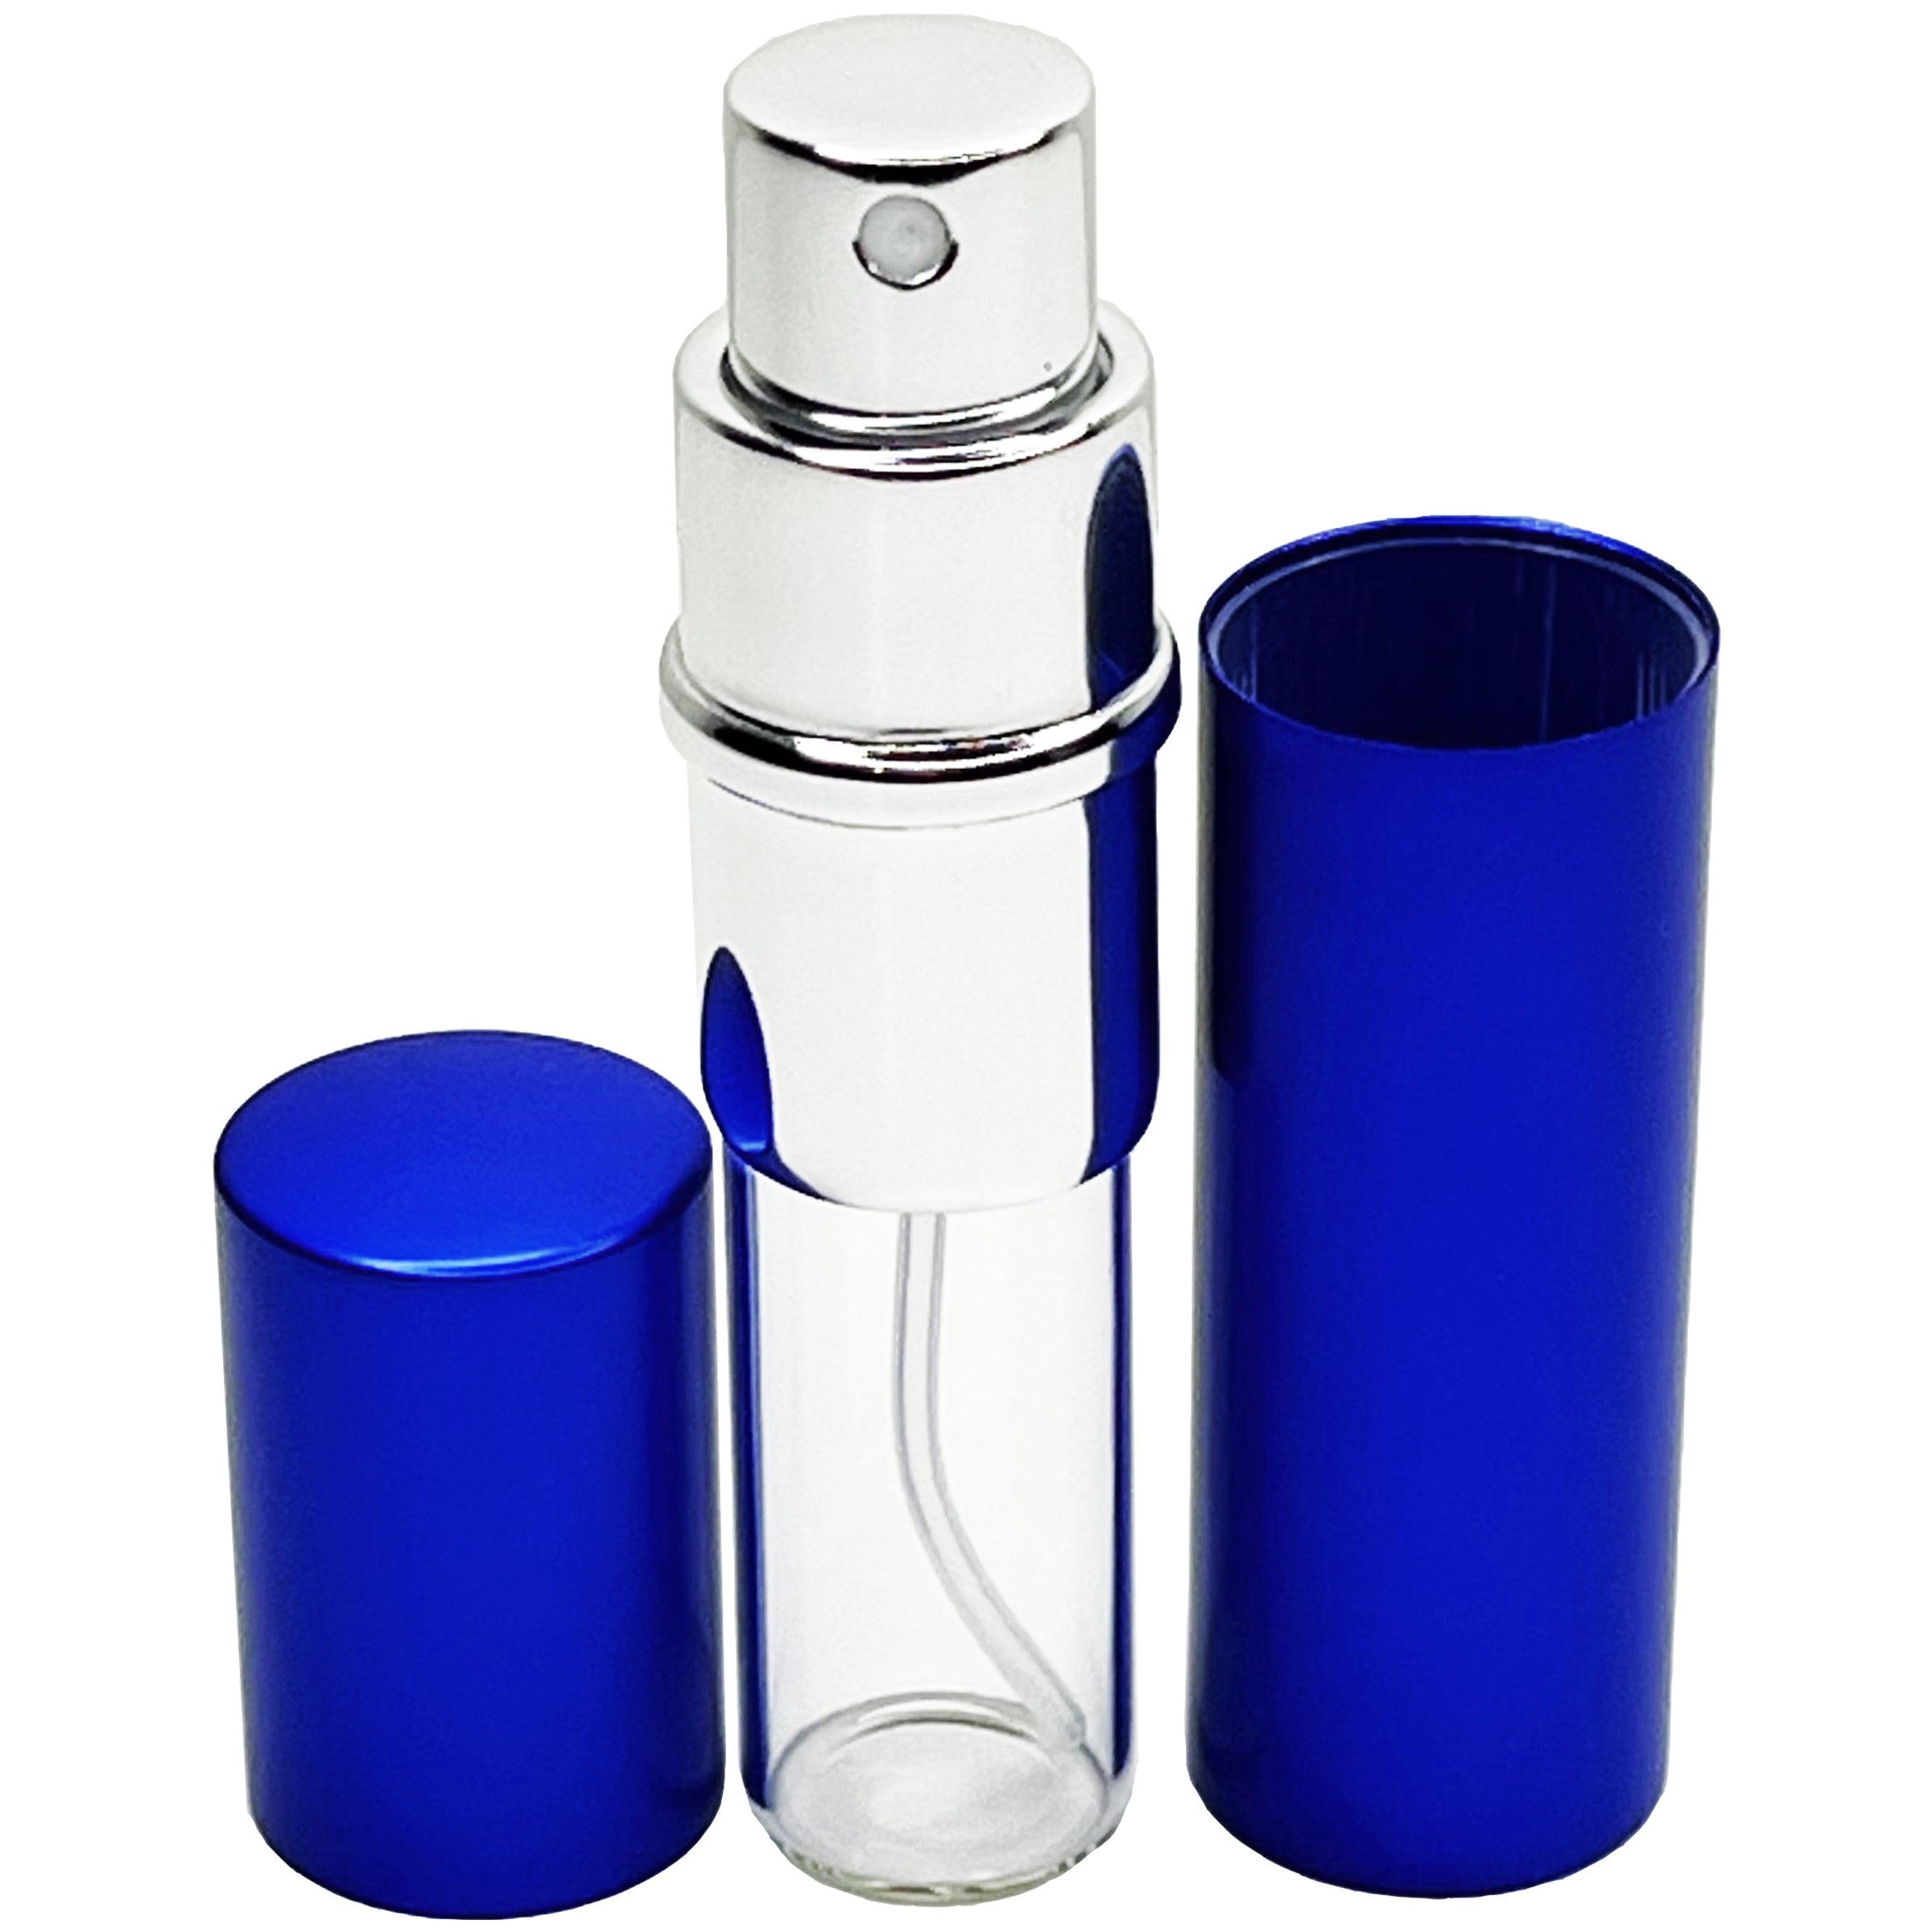 10ml 0.33oz royal blue perfume glass spray bottles metal shell